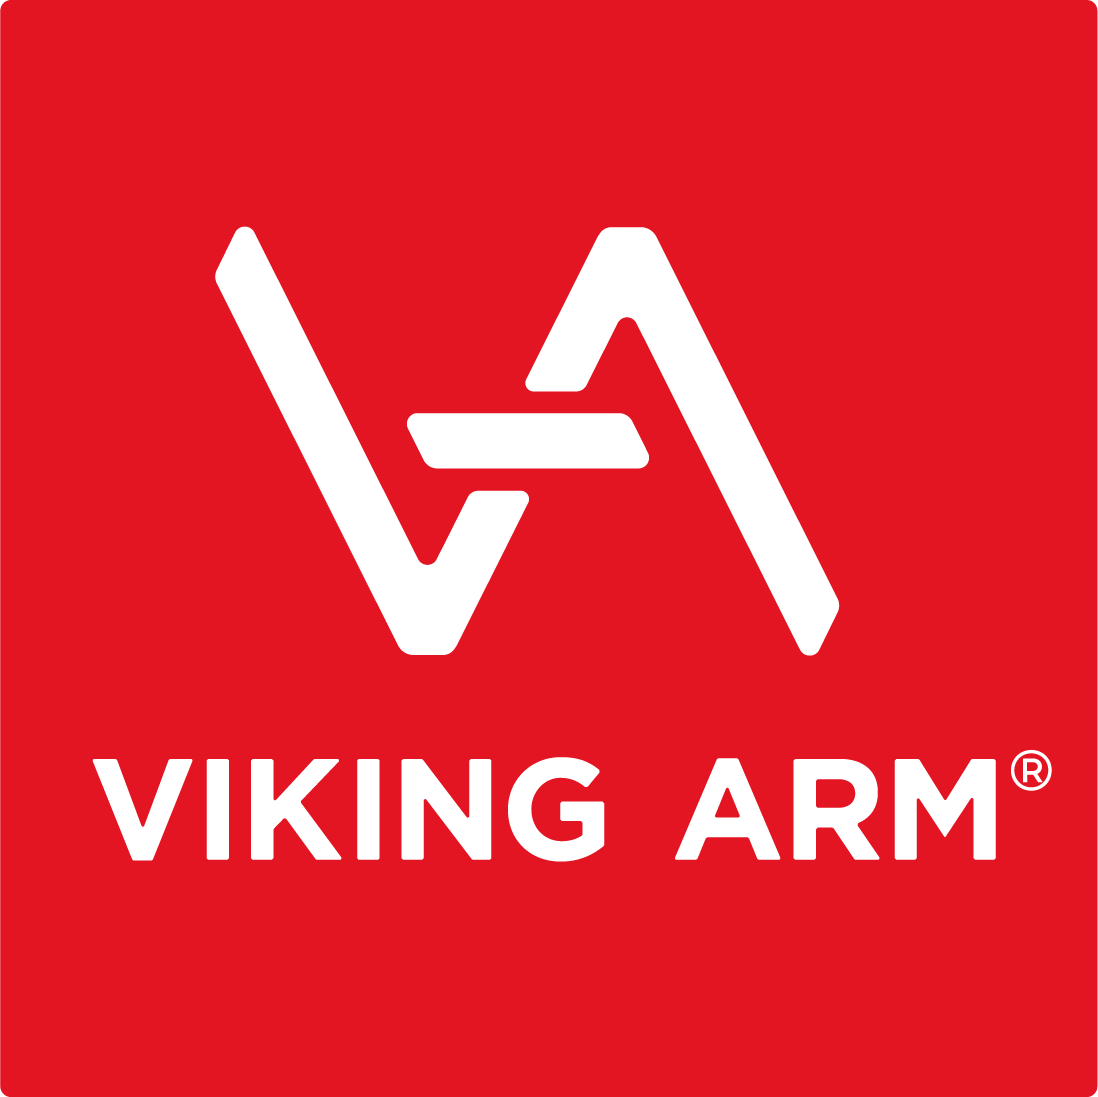 Viking Arm Handheld Jack Bar Clamp Labor Saving Tool Lift Up to 330 lbs  (150 kg)